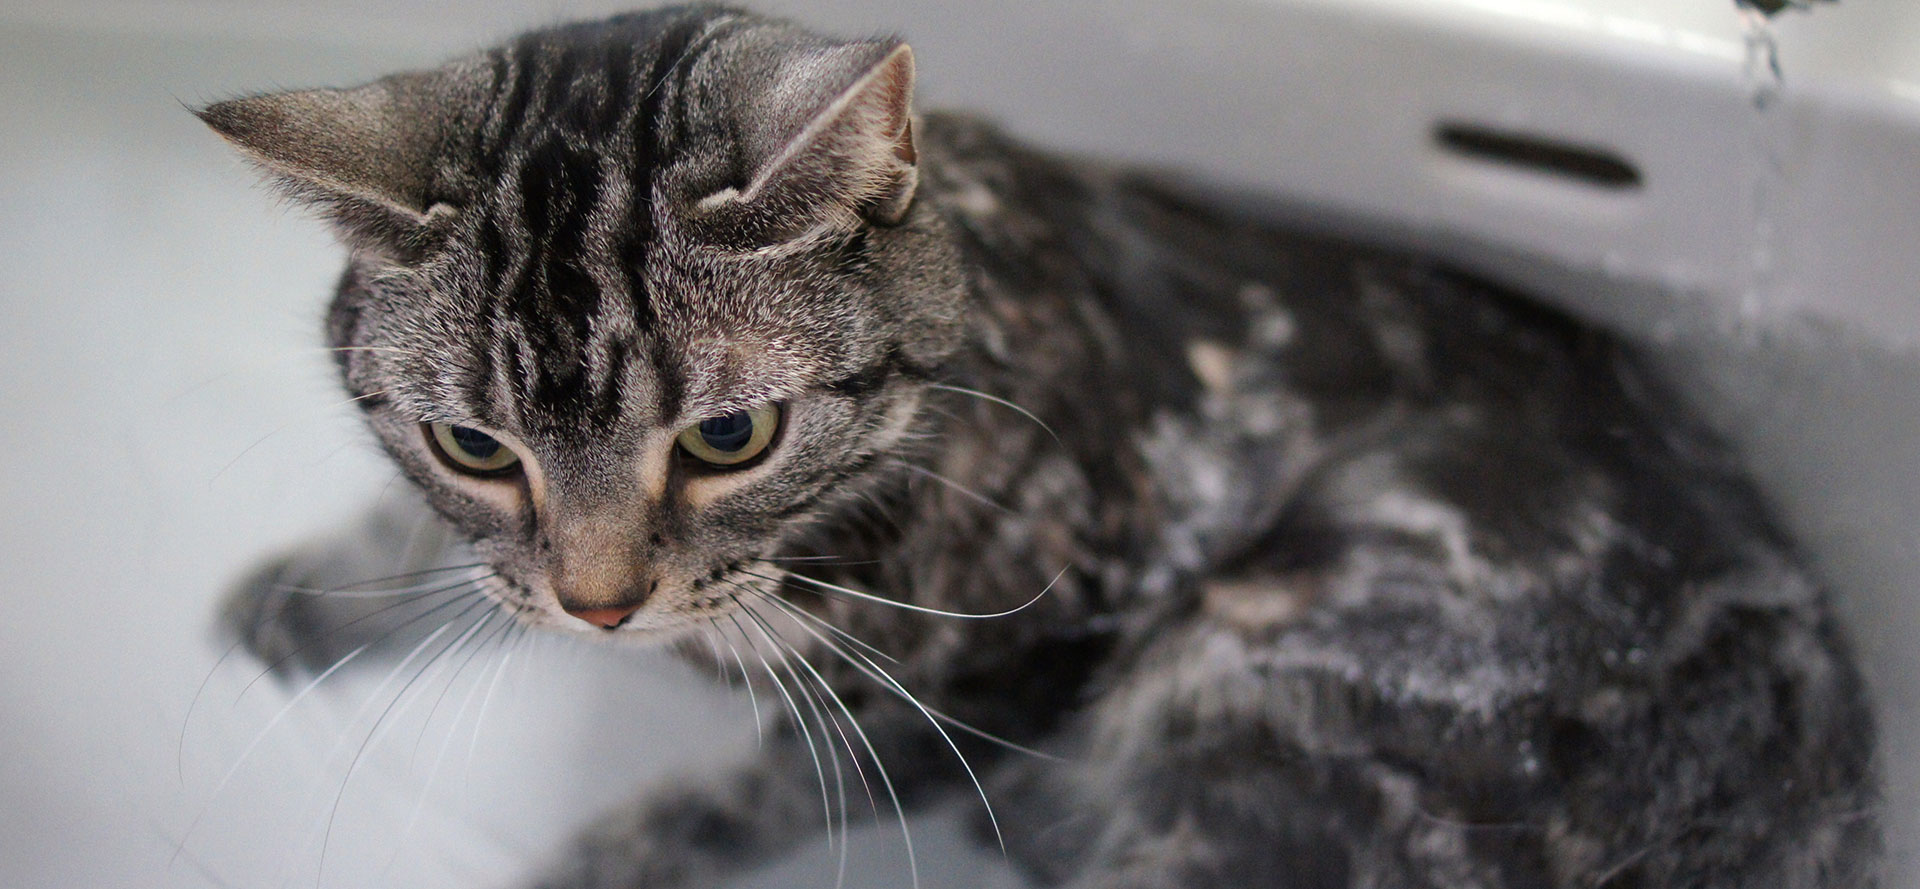 Cat waiting for shampoo in bath.